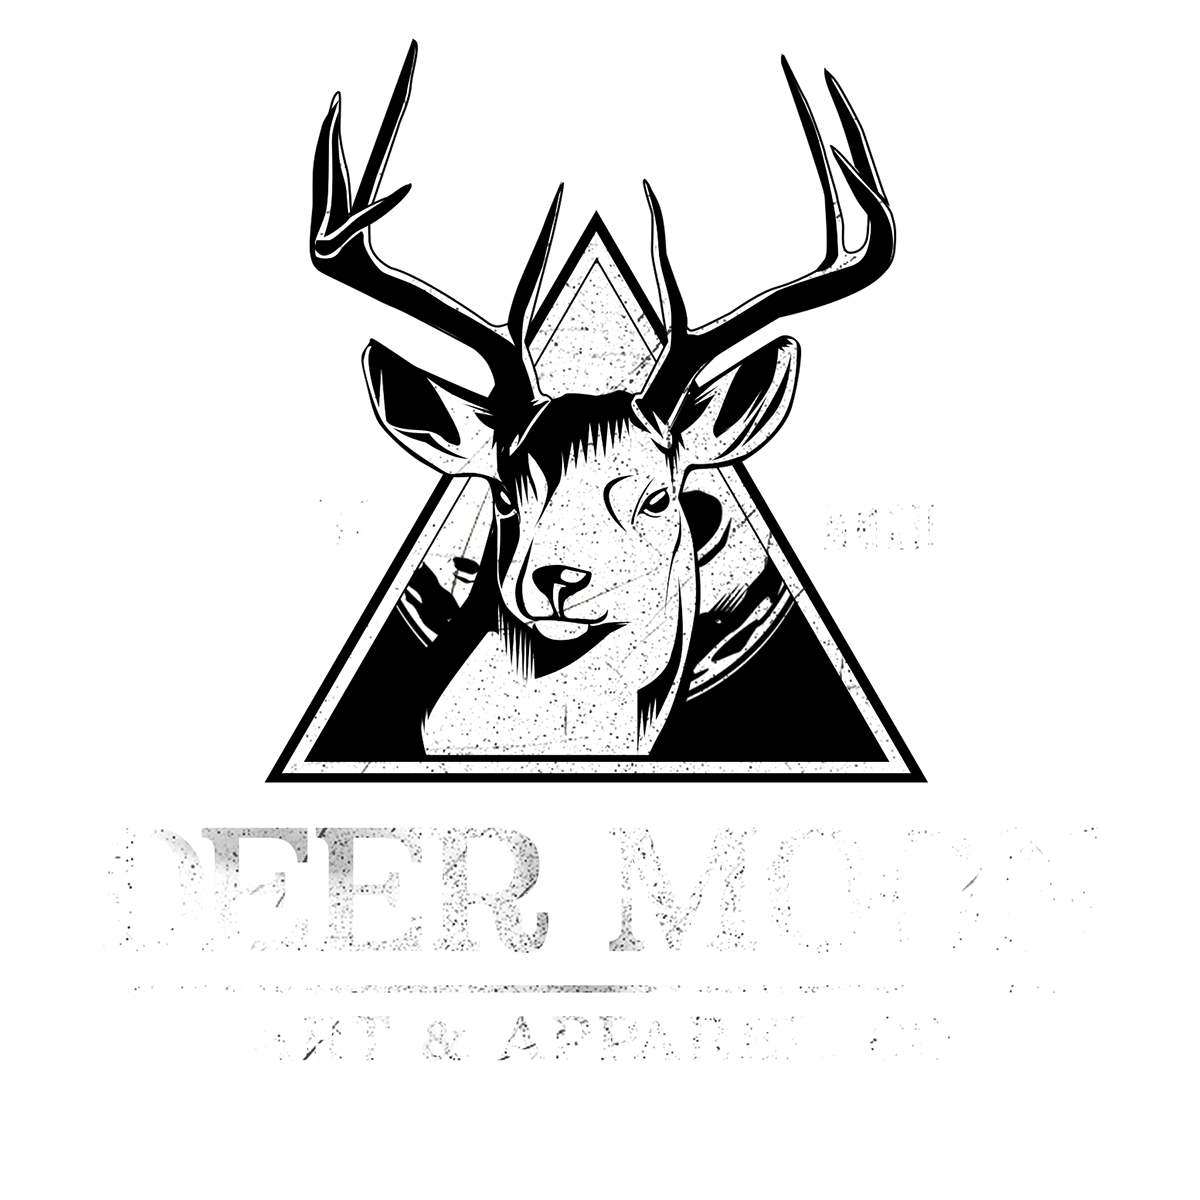 deer moon art apparel Clothing Clothing Line Urban tees t-shirt logo Website design brand local brand